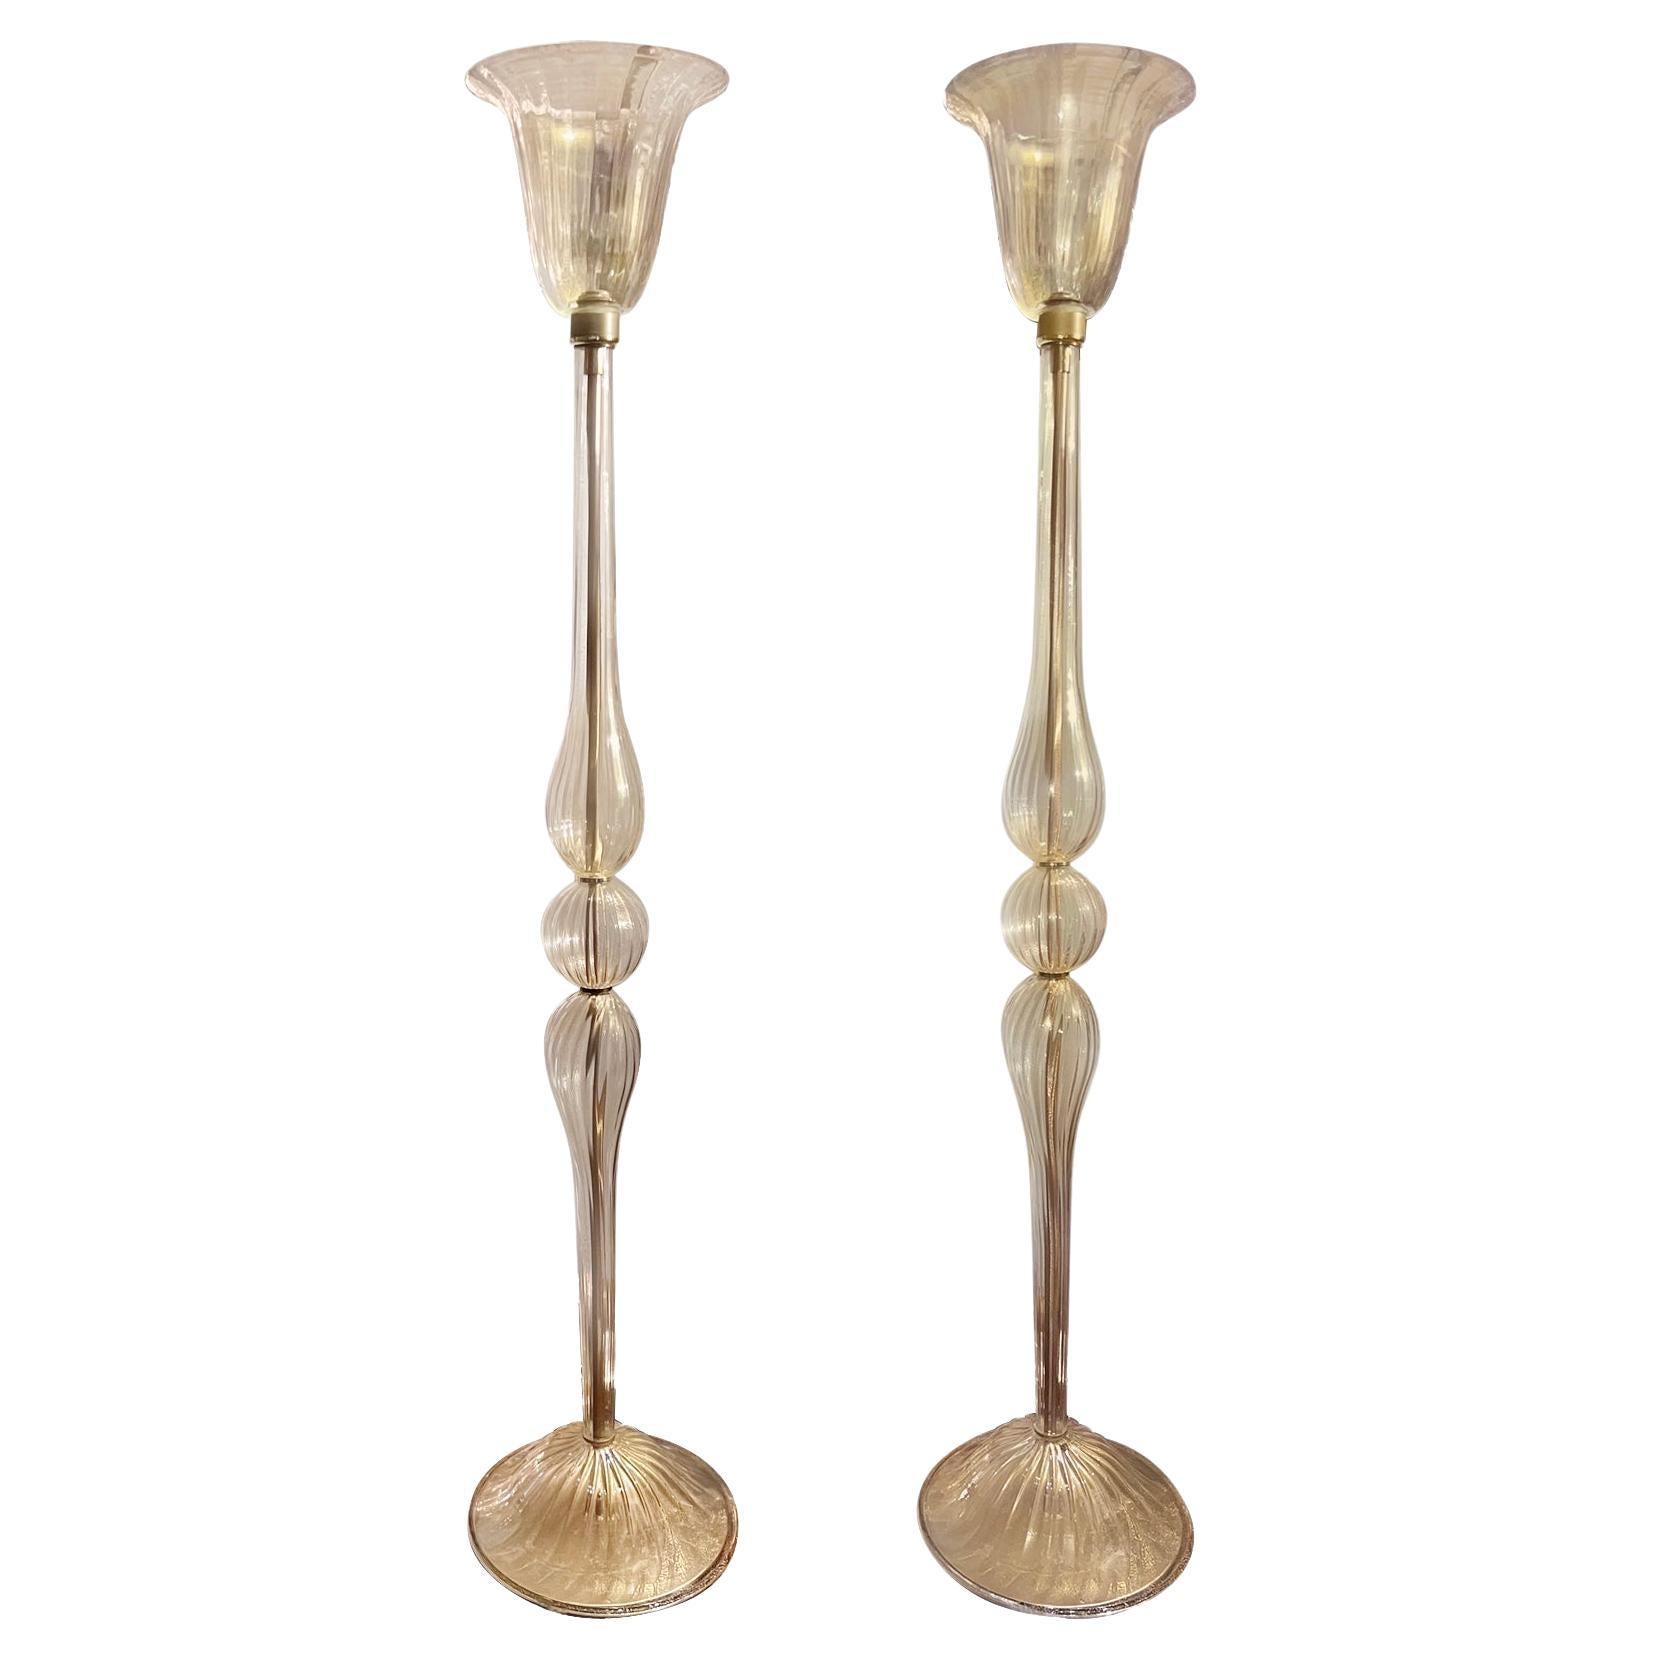 Pair of Murano Glass Floor Lamps